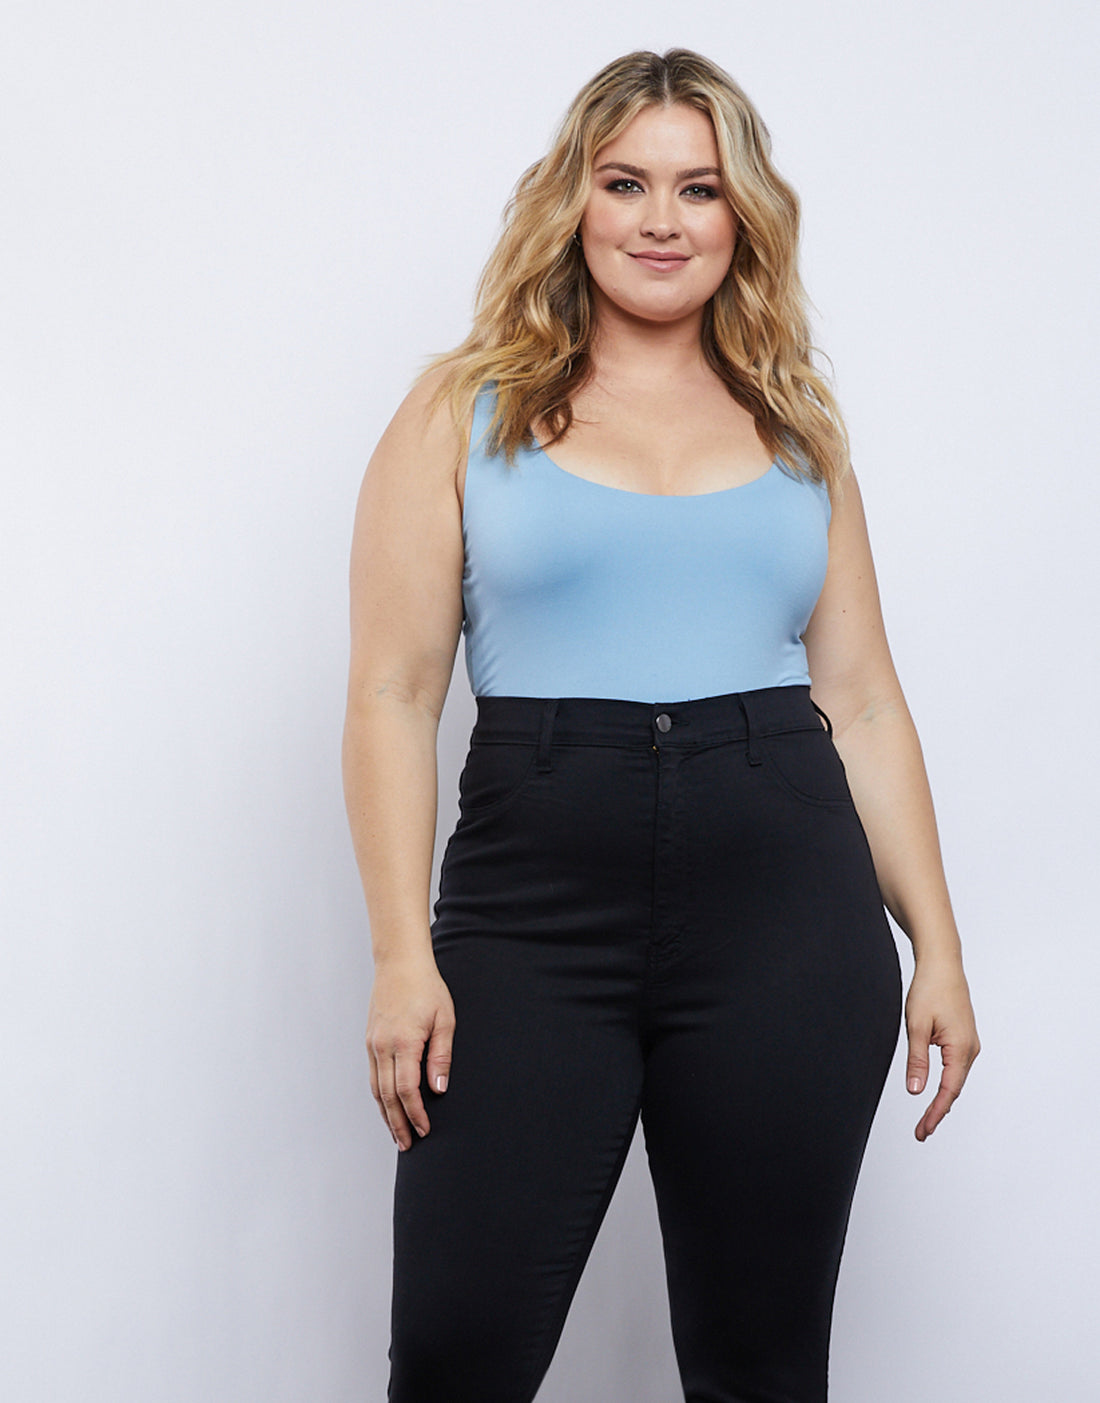 Curve Avery Sleeveless Bodysuit Plus Size Tops -2020AVE